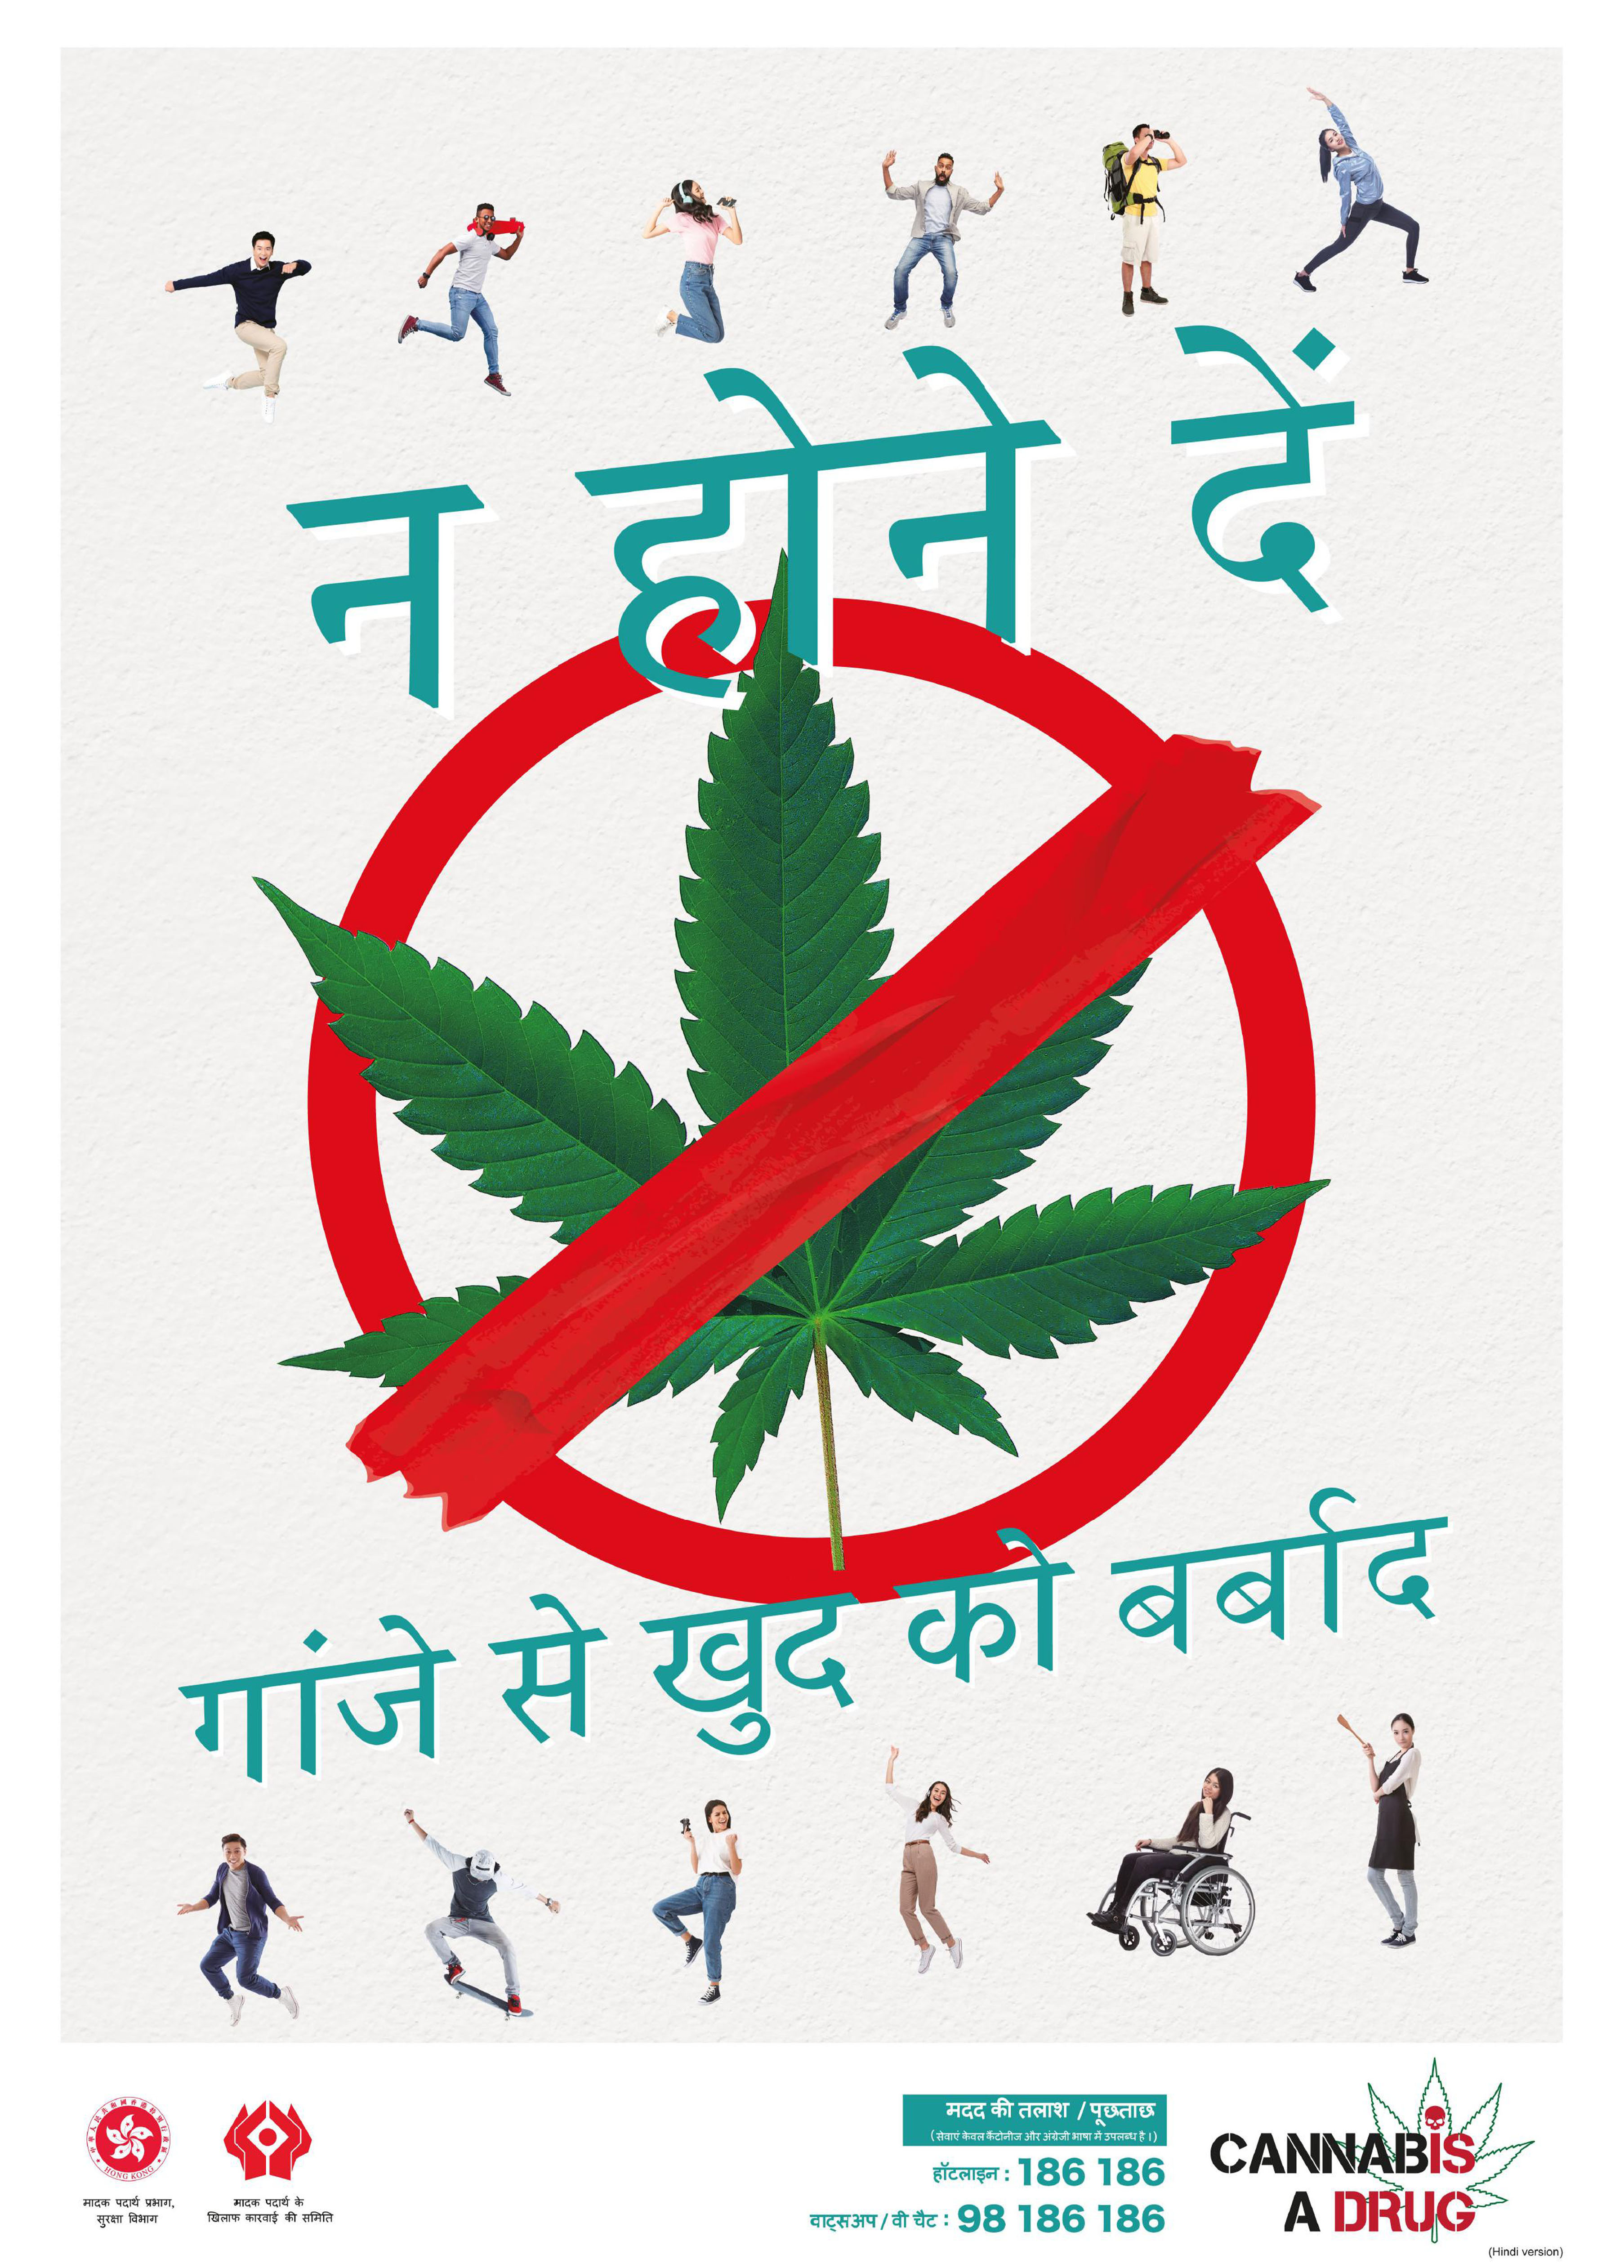 Anti-drug poster "Dont let cannabis ruin you" - Hindi version